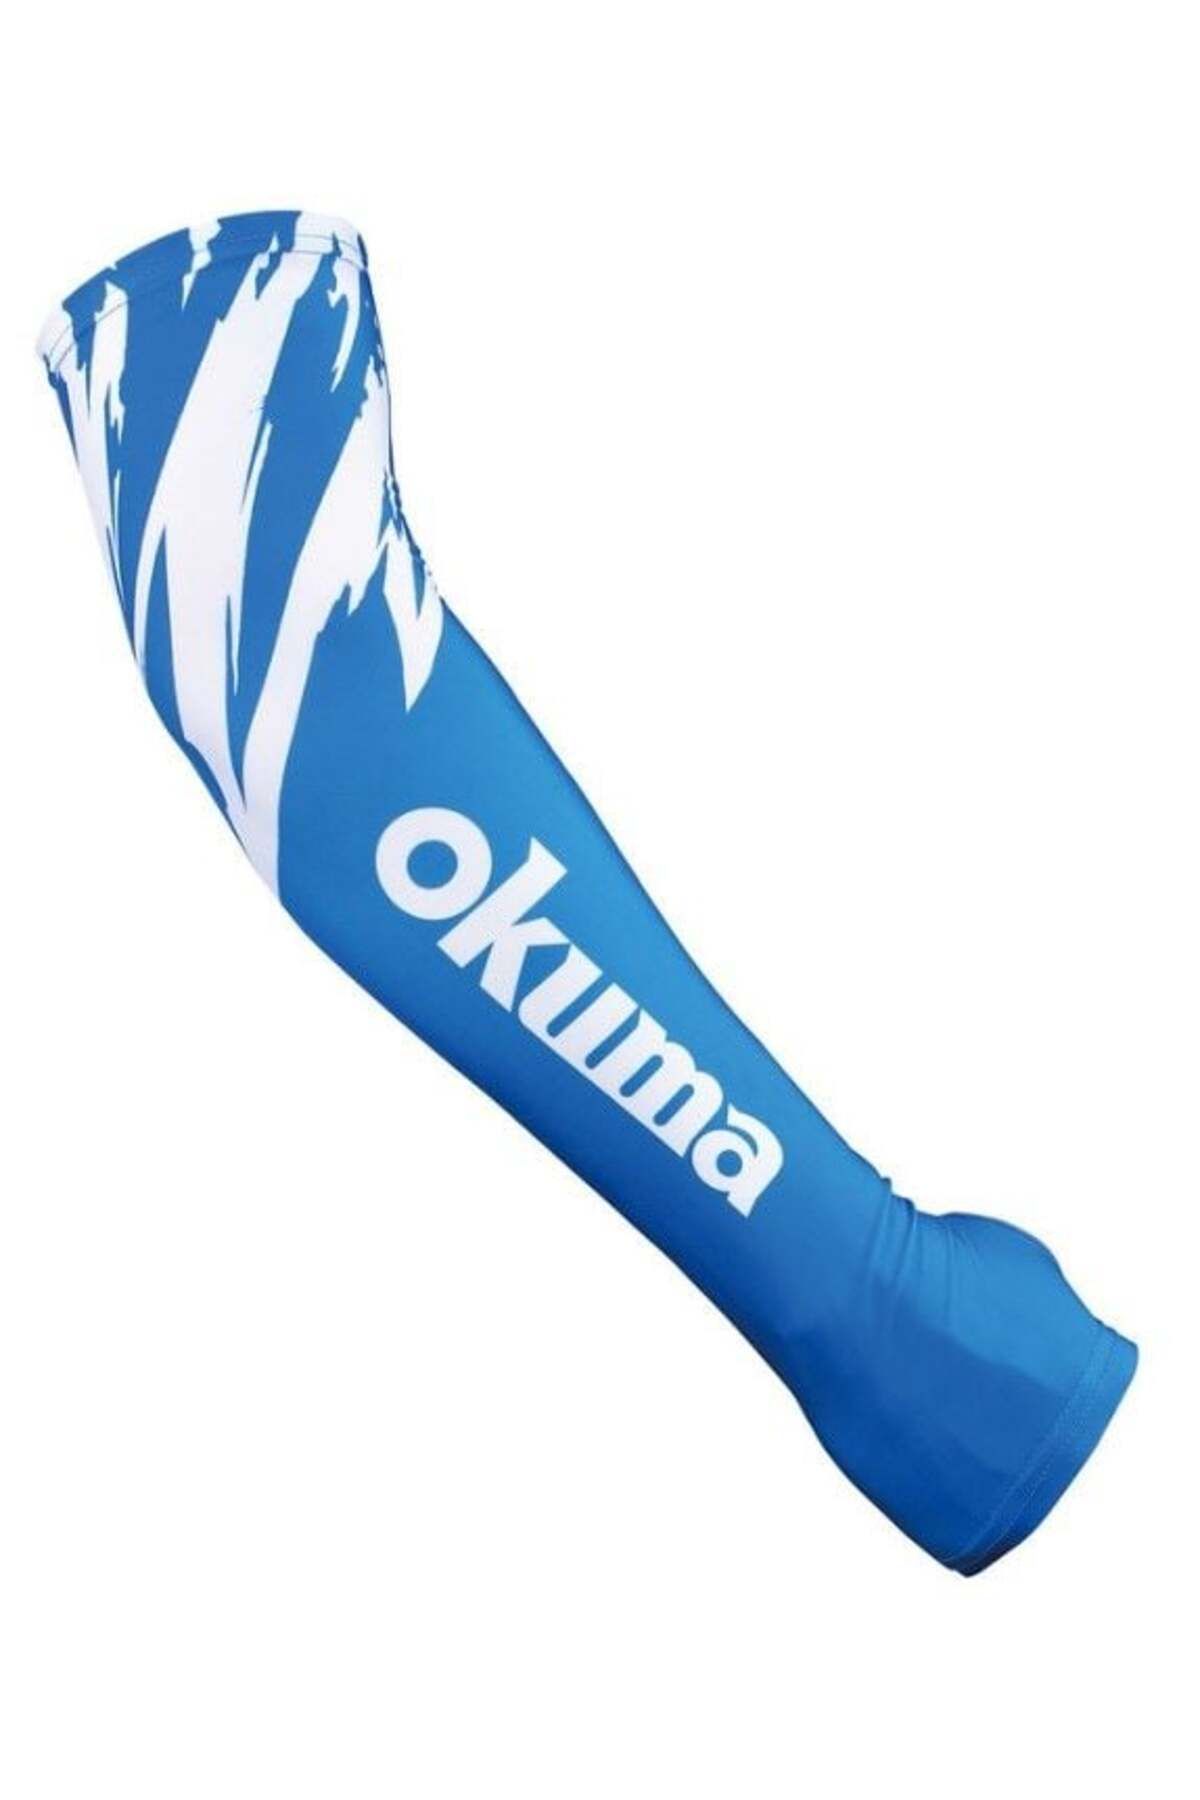 Okuma Blue Motif Sleeves L